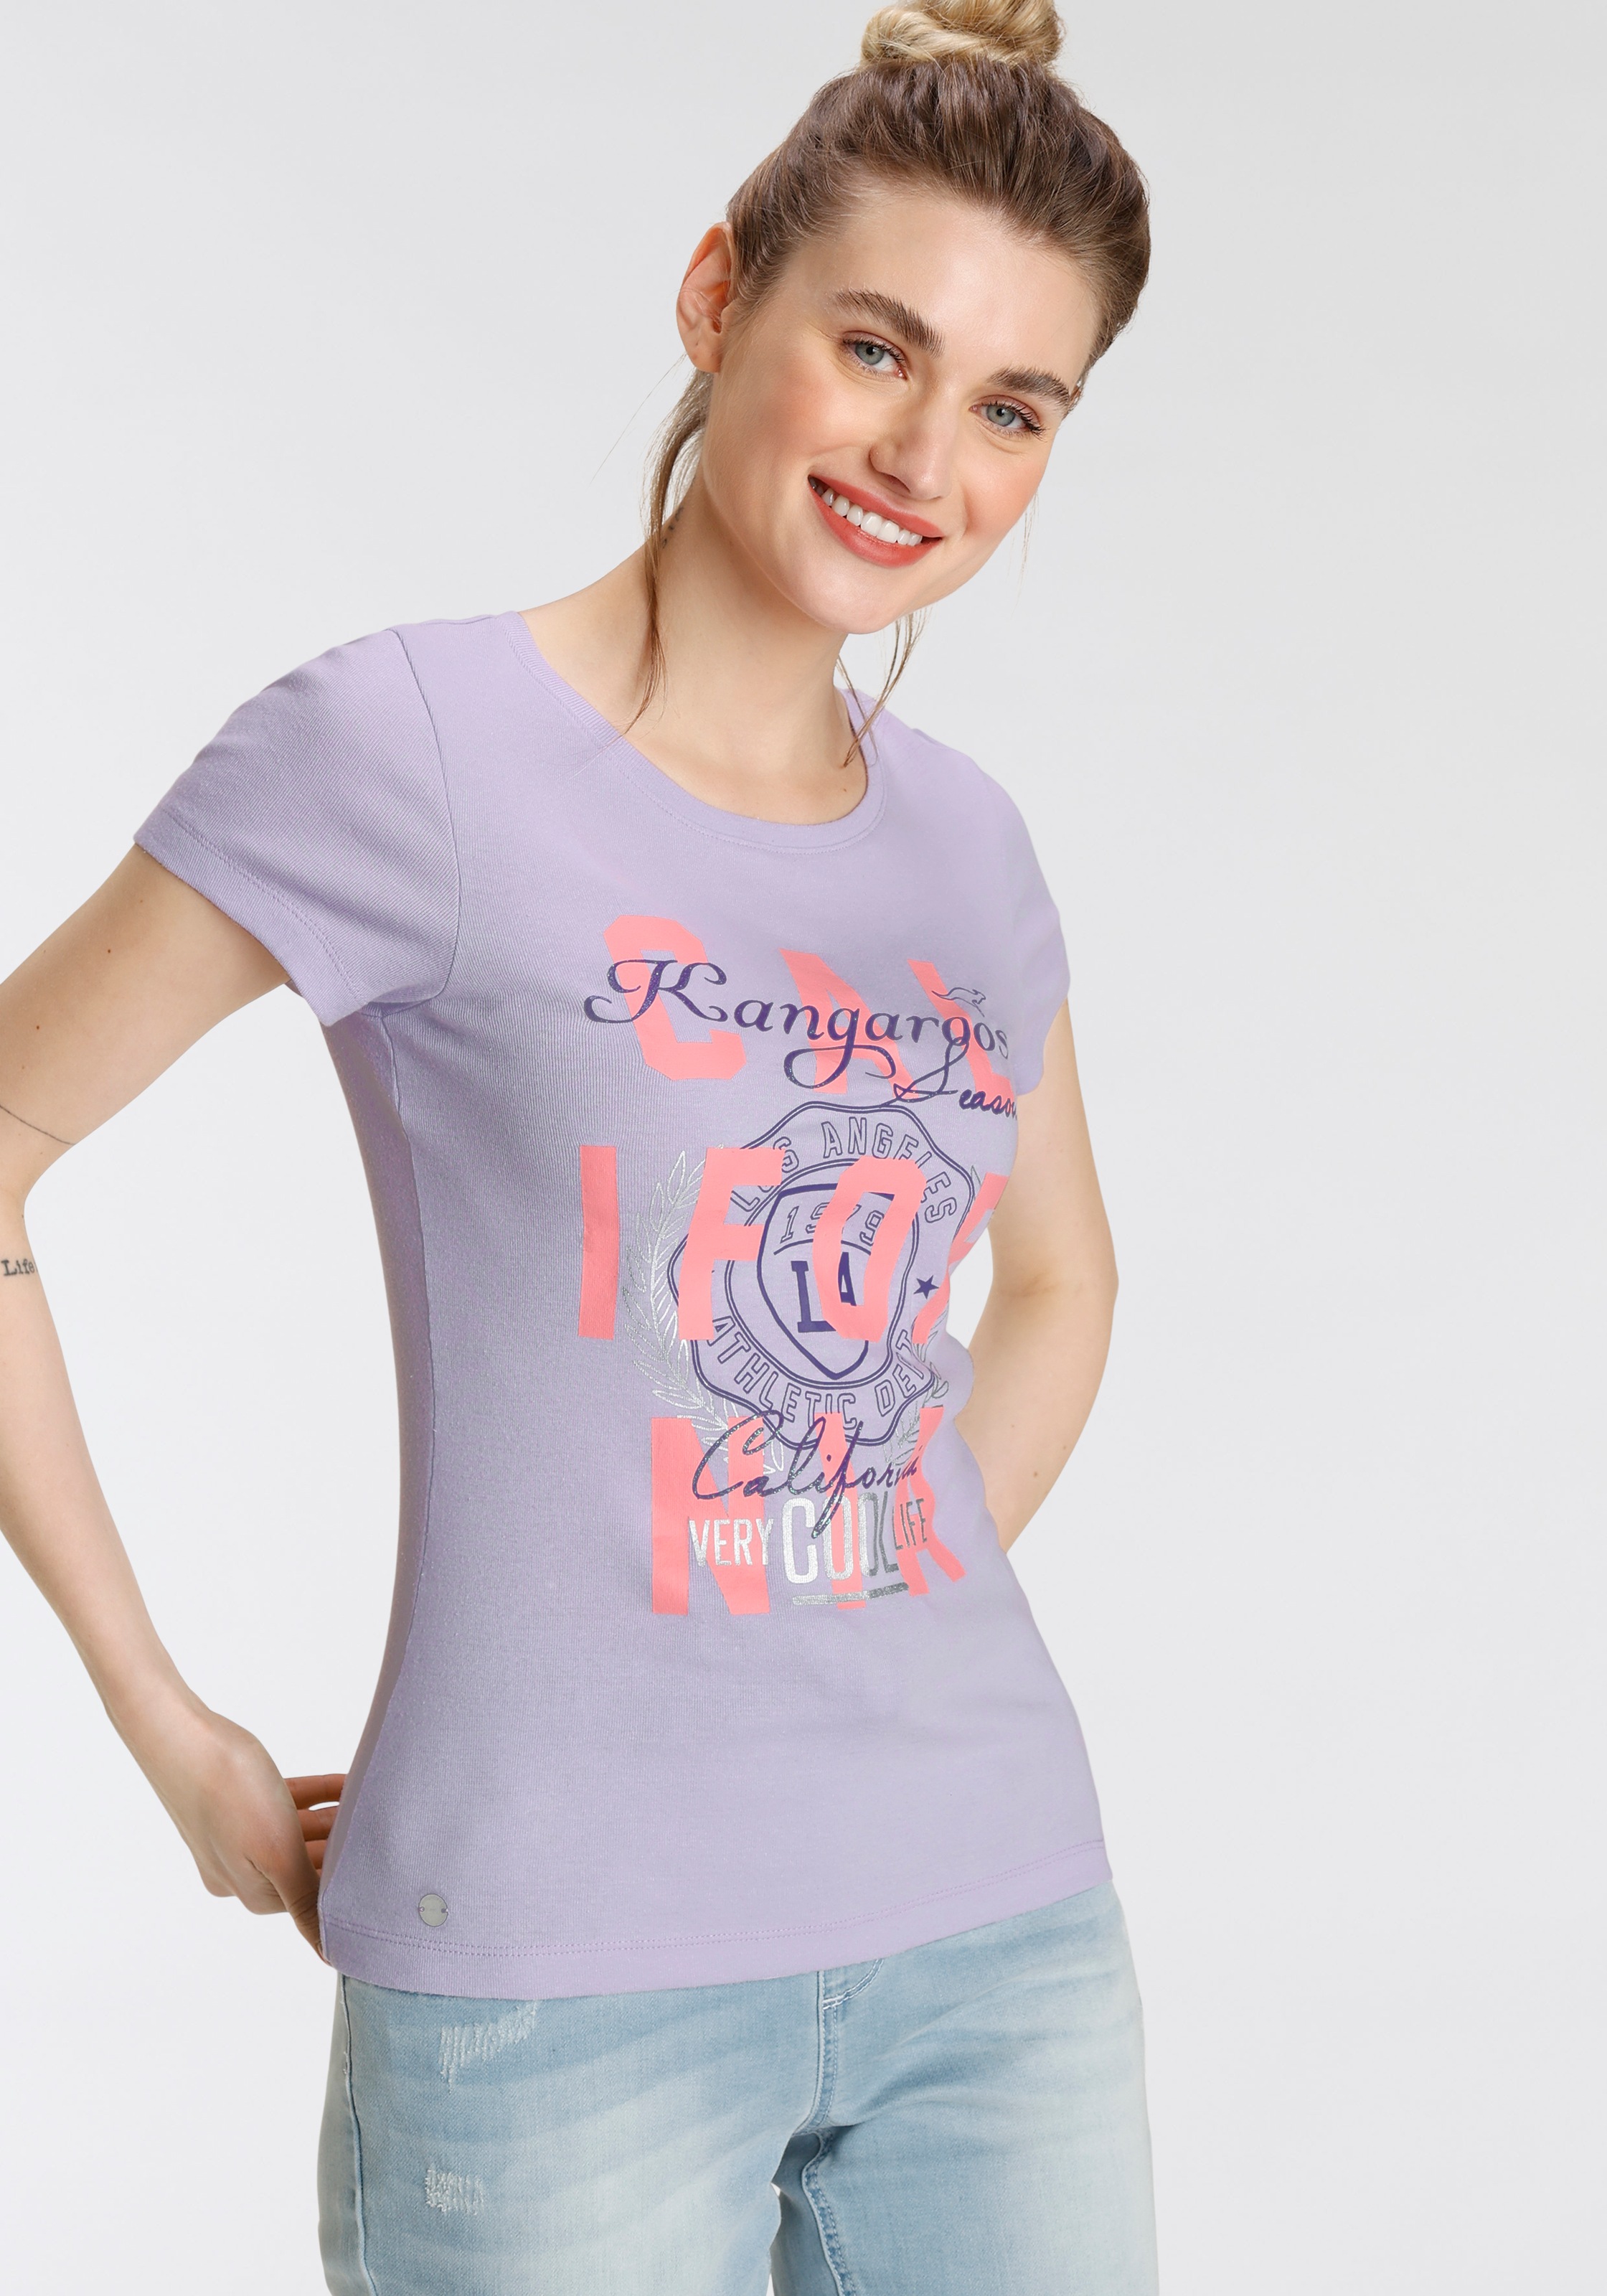 bestellen NEUE KOLLEKTION Logodruck - online mit Print-Shirt, California-Style im KangaROOS